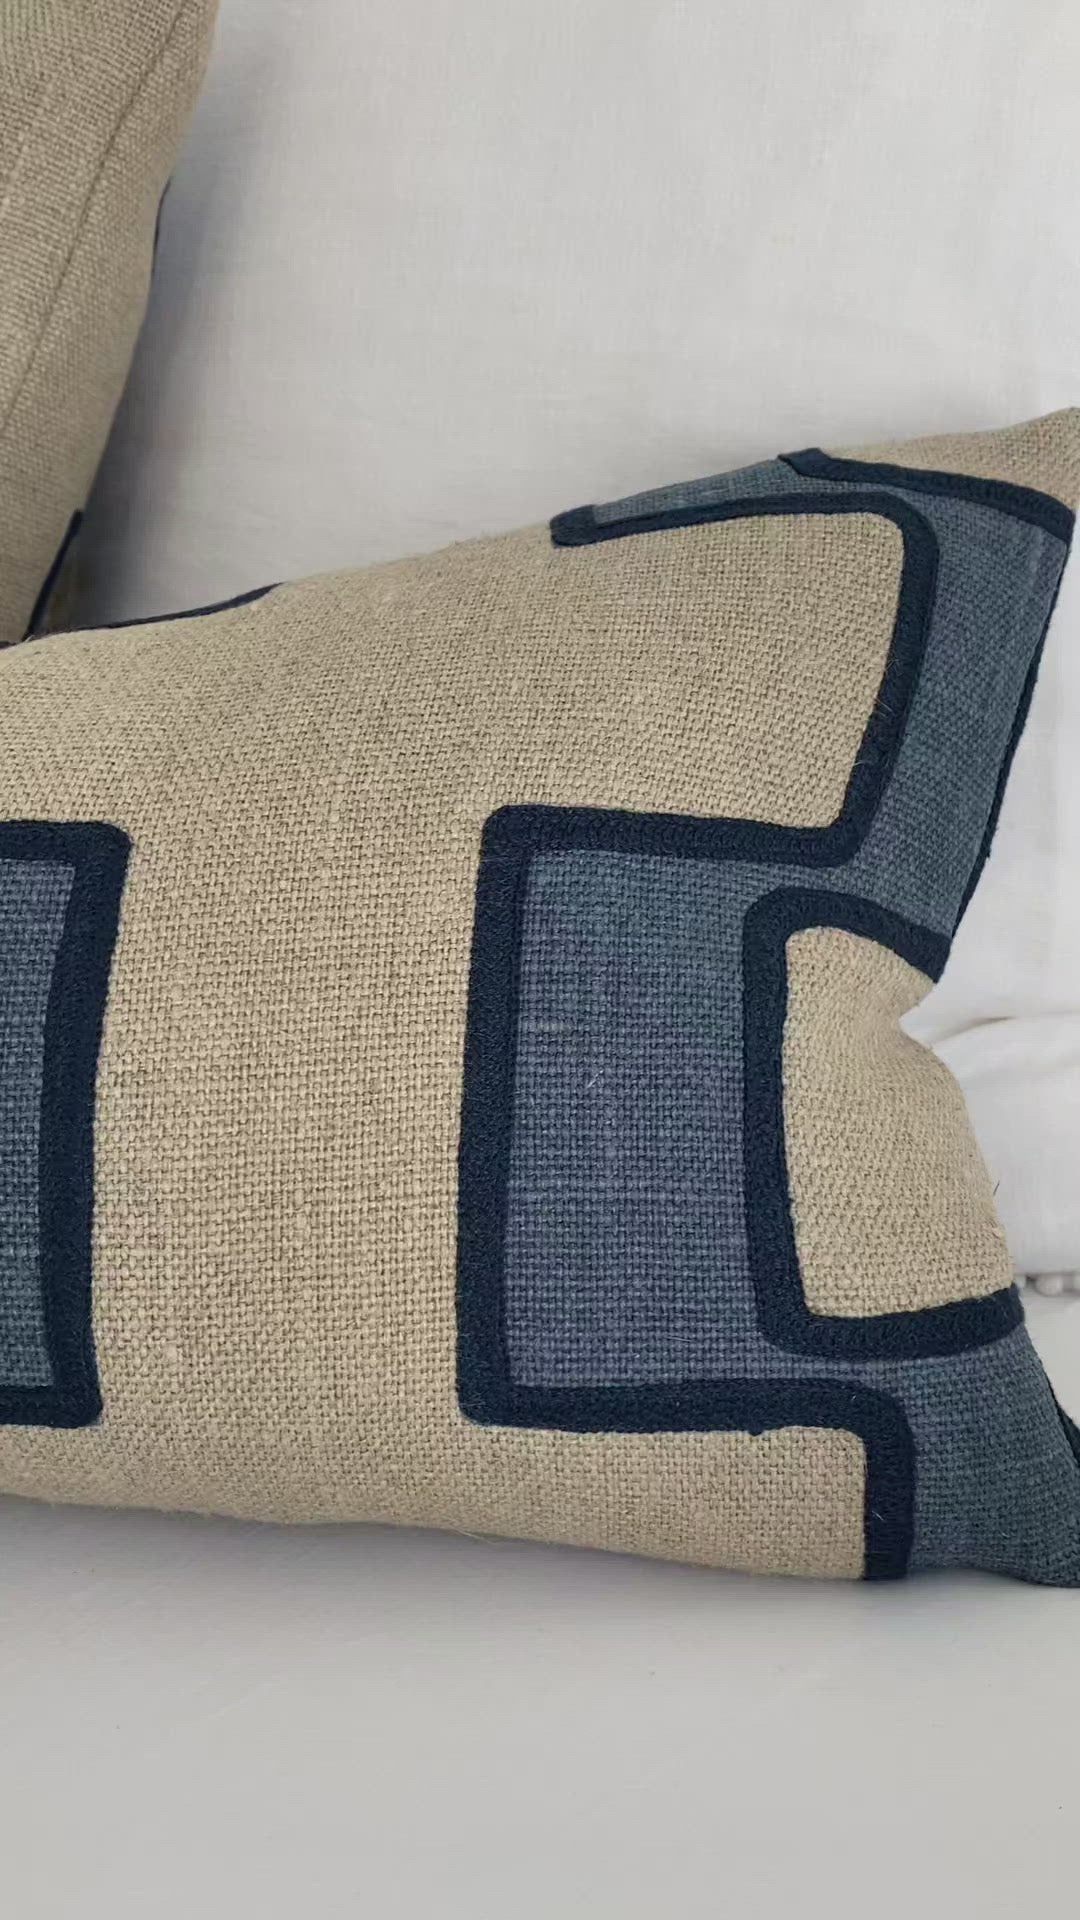 Schumacher Dixon Embroidered Blue Linen Luxury Designer Throw Pillow Cover Product Video